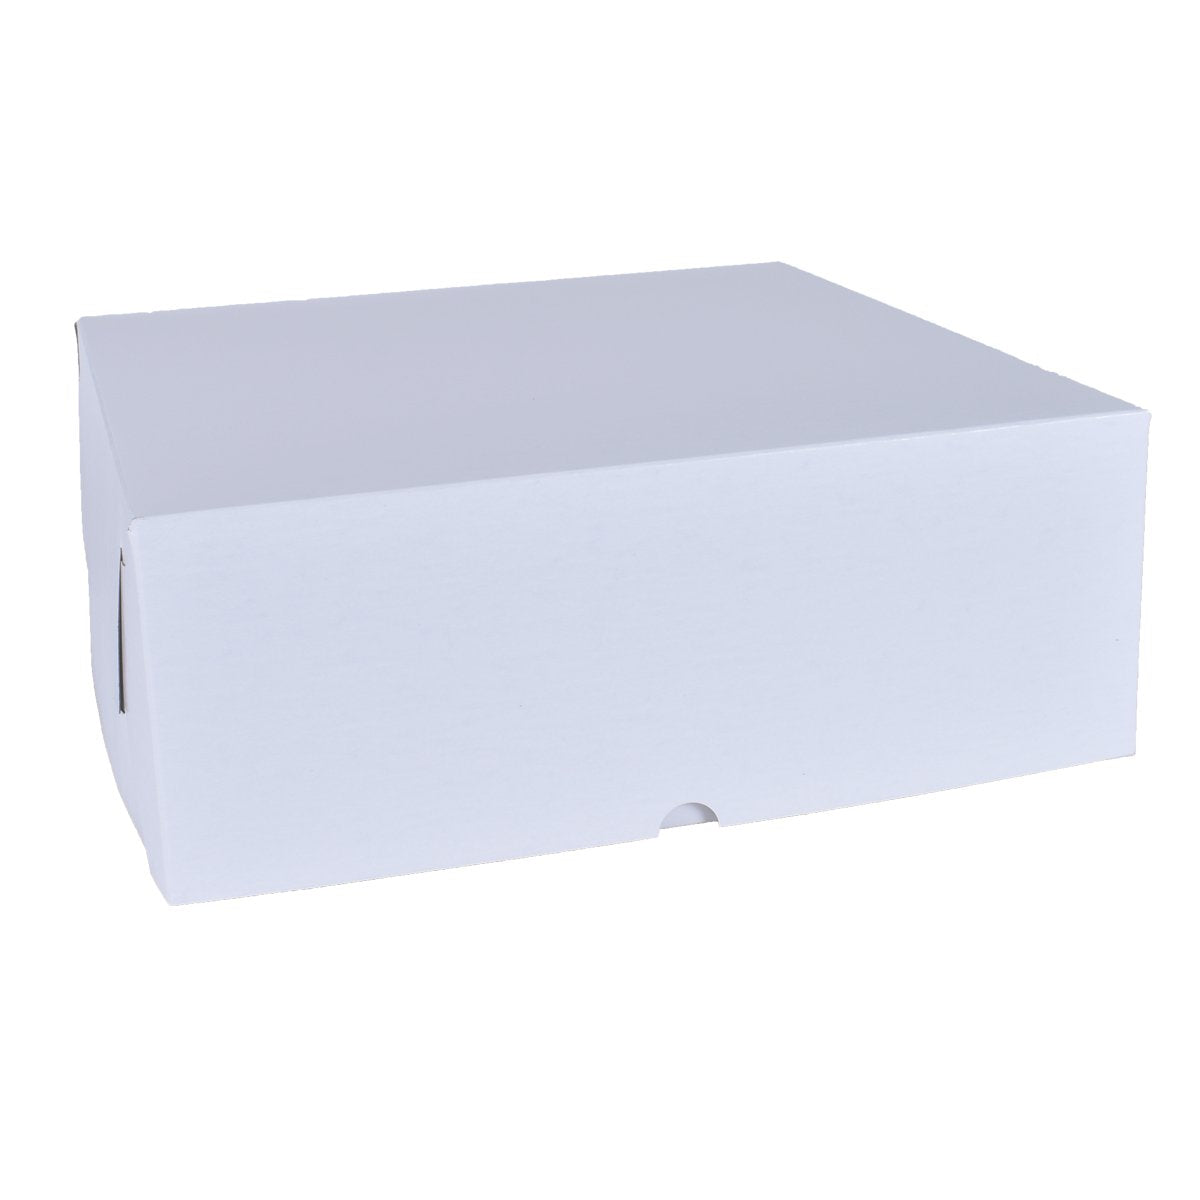 White Cake Boxes - 14x14x6 Bake Supply Plus Box - Bake Supply Plus